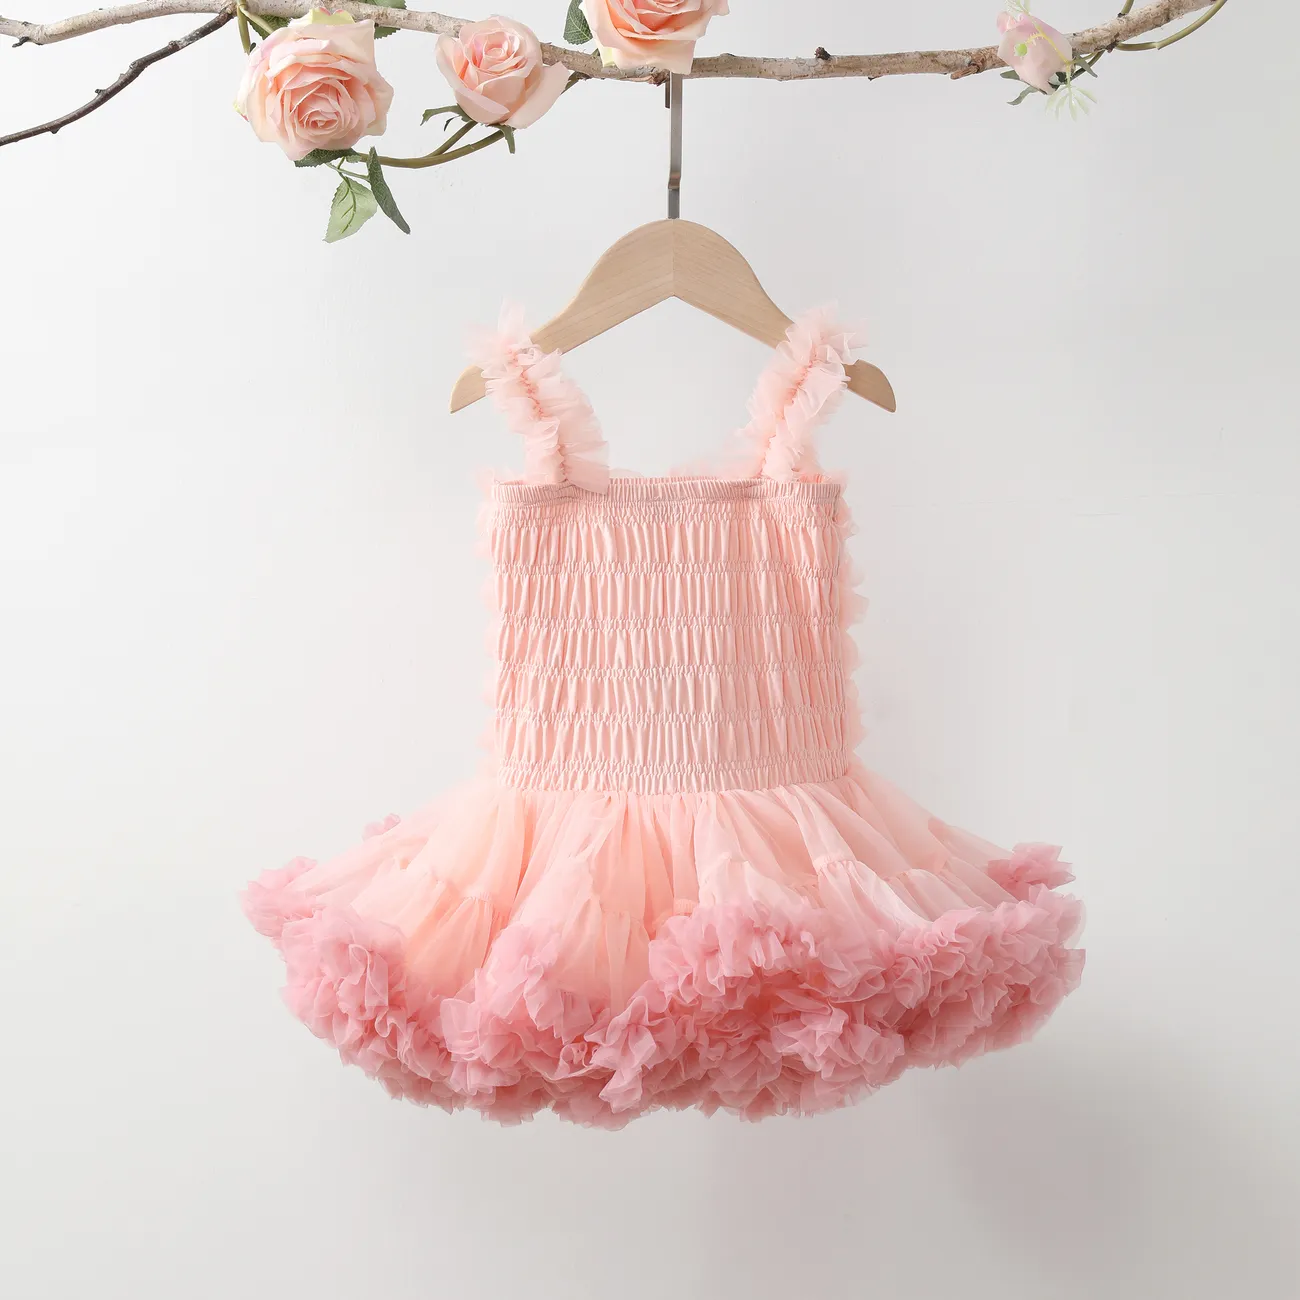 Sweet Girl Tutu Dress with Agaric Edge, Cotton-Spandex Blend, for Kids, Regular Pink big image 1